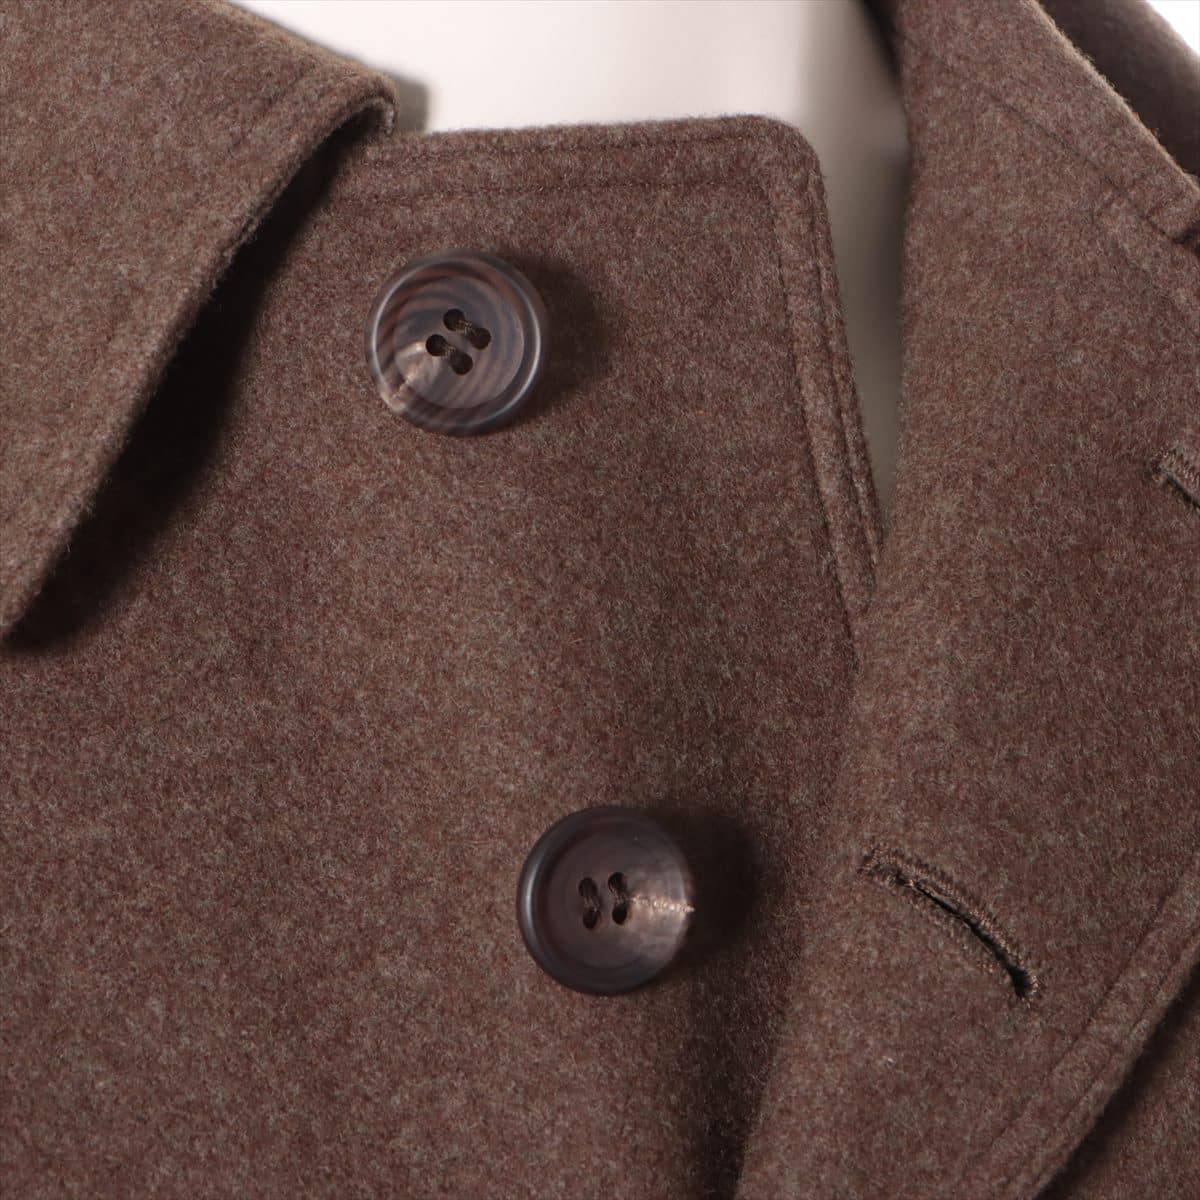 Y's Wool & nylon coats 3 Men's Khaki  YK-J13-159